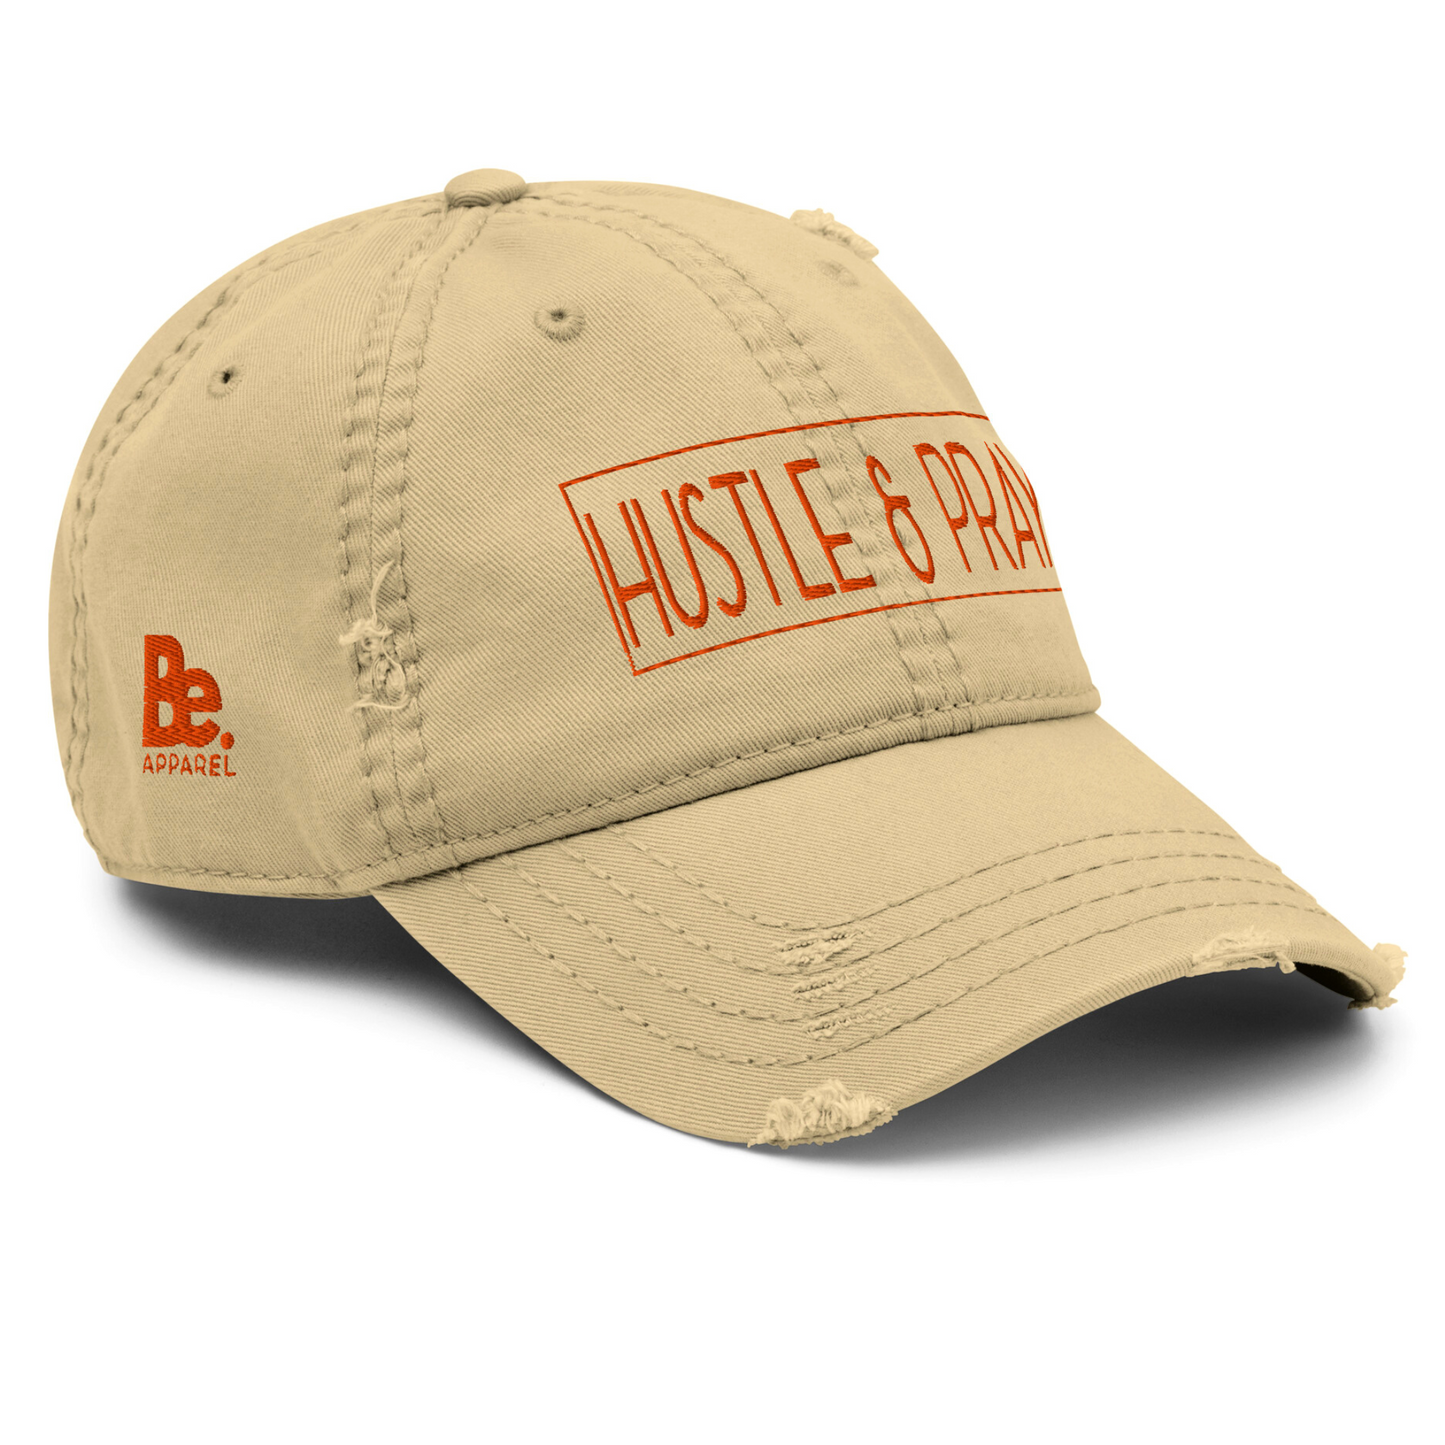 HUSTLE & PRAY - Tan & Orange Embroidered Distressed Dad Hat